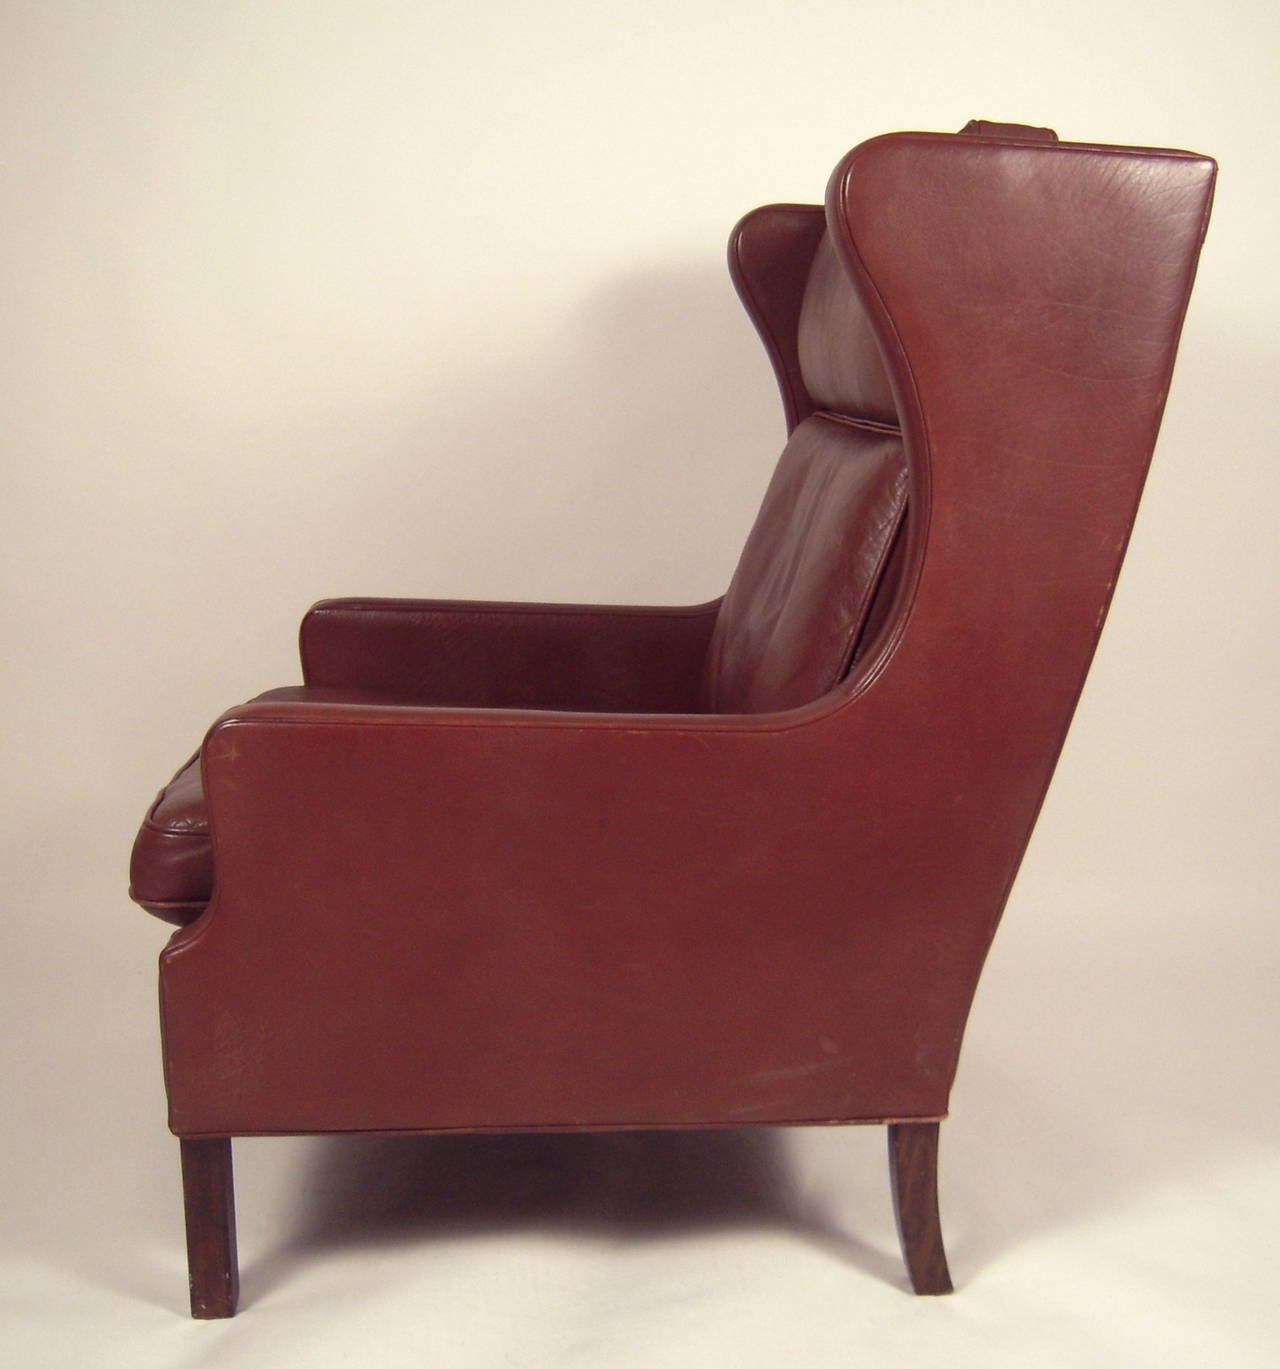 Mid-20th Century Vintage Danish Mid Century Leather Wingback Chair